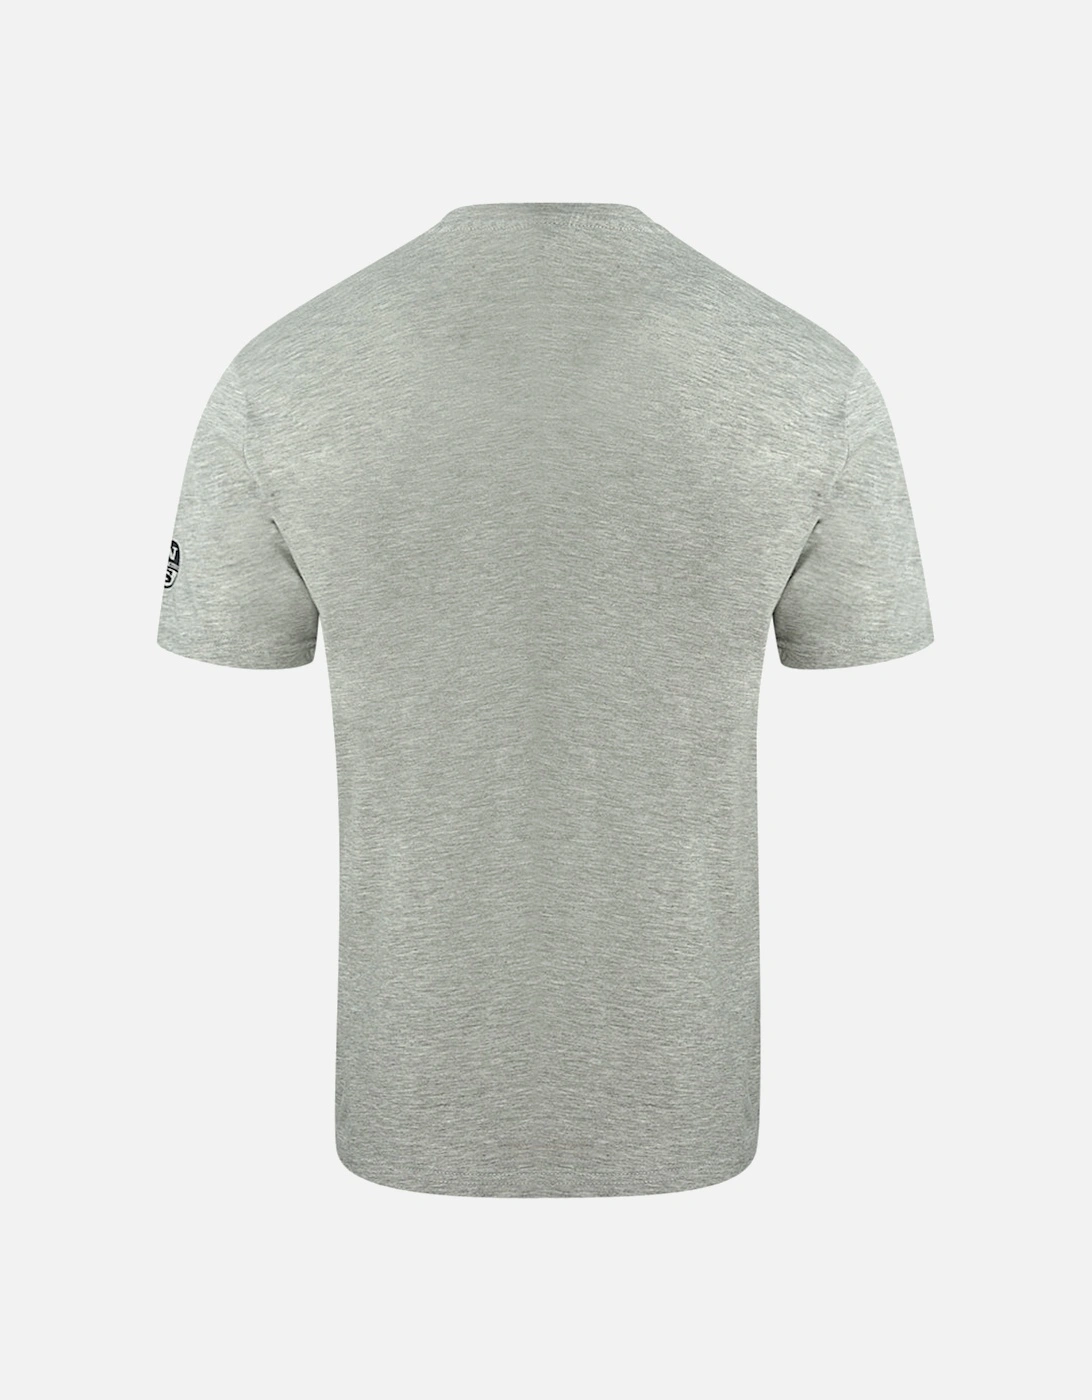 Est 1957 Grey T-Shirt